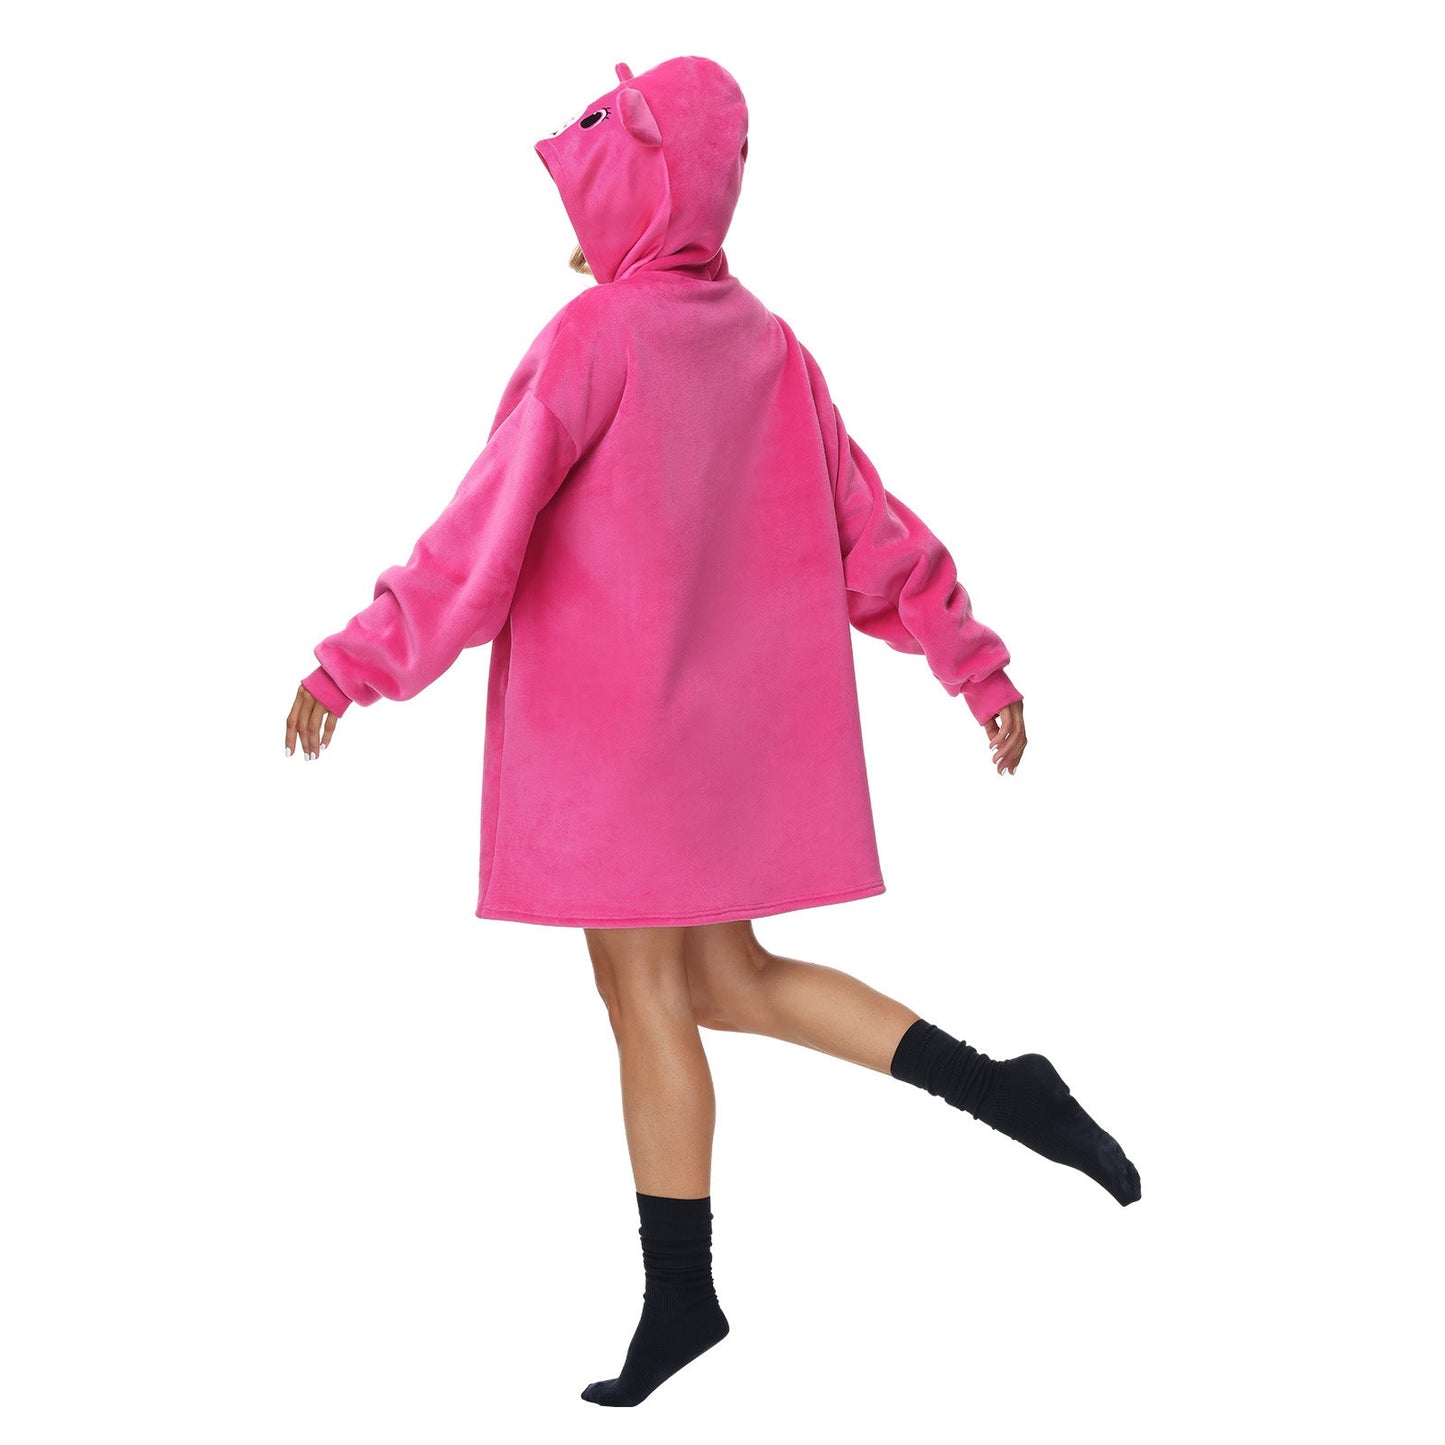 Rainbow Print Winter Warm Hoodies Wearable Sleepwear Blanket-Blankets-BWQN001-One Size-Free Shipping Leatheretro